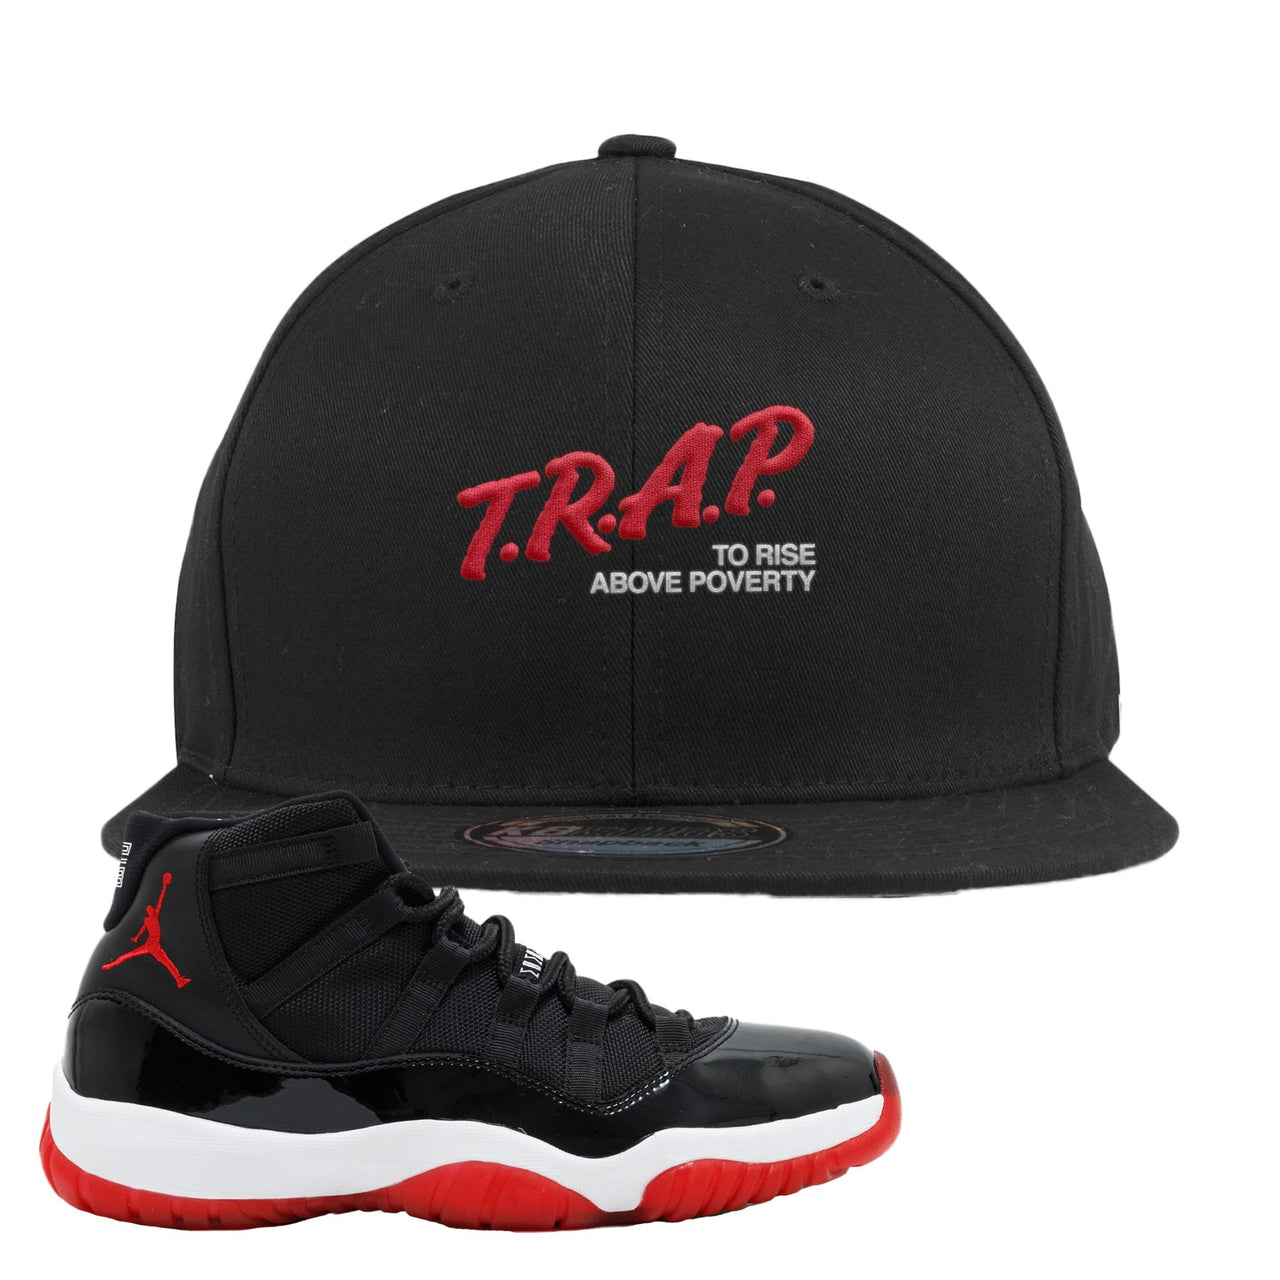 Jordan 11 Bred Trap To Rise Above Poverty Black Sneaker Hook Up Snapback Hat